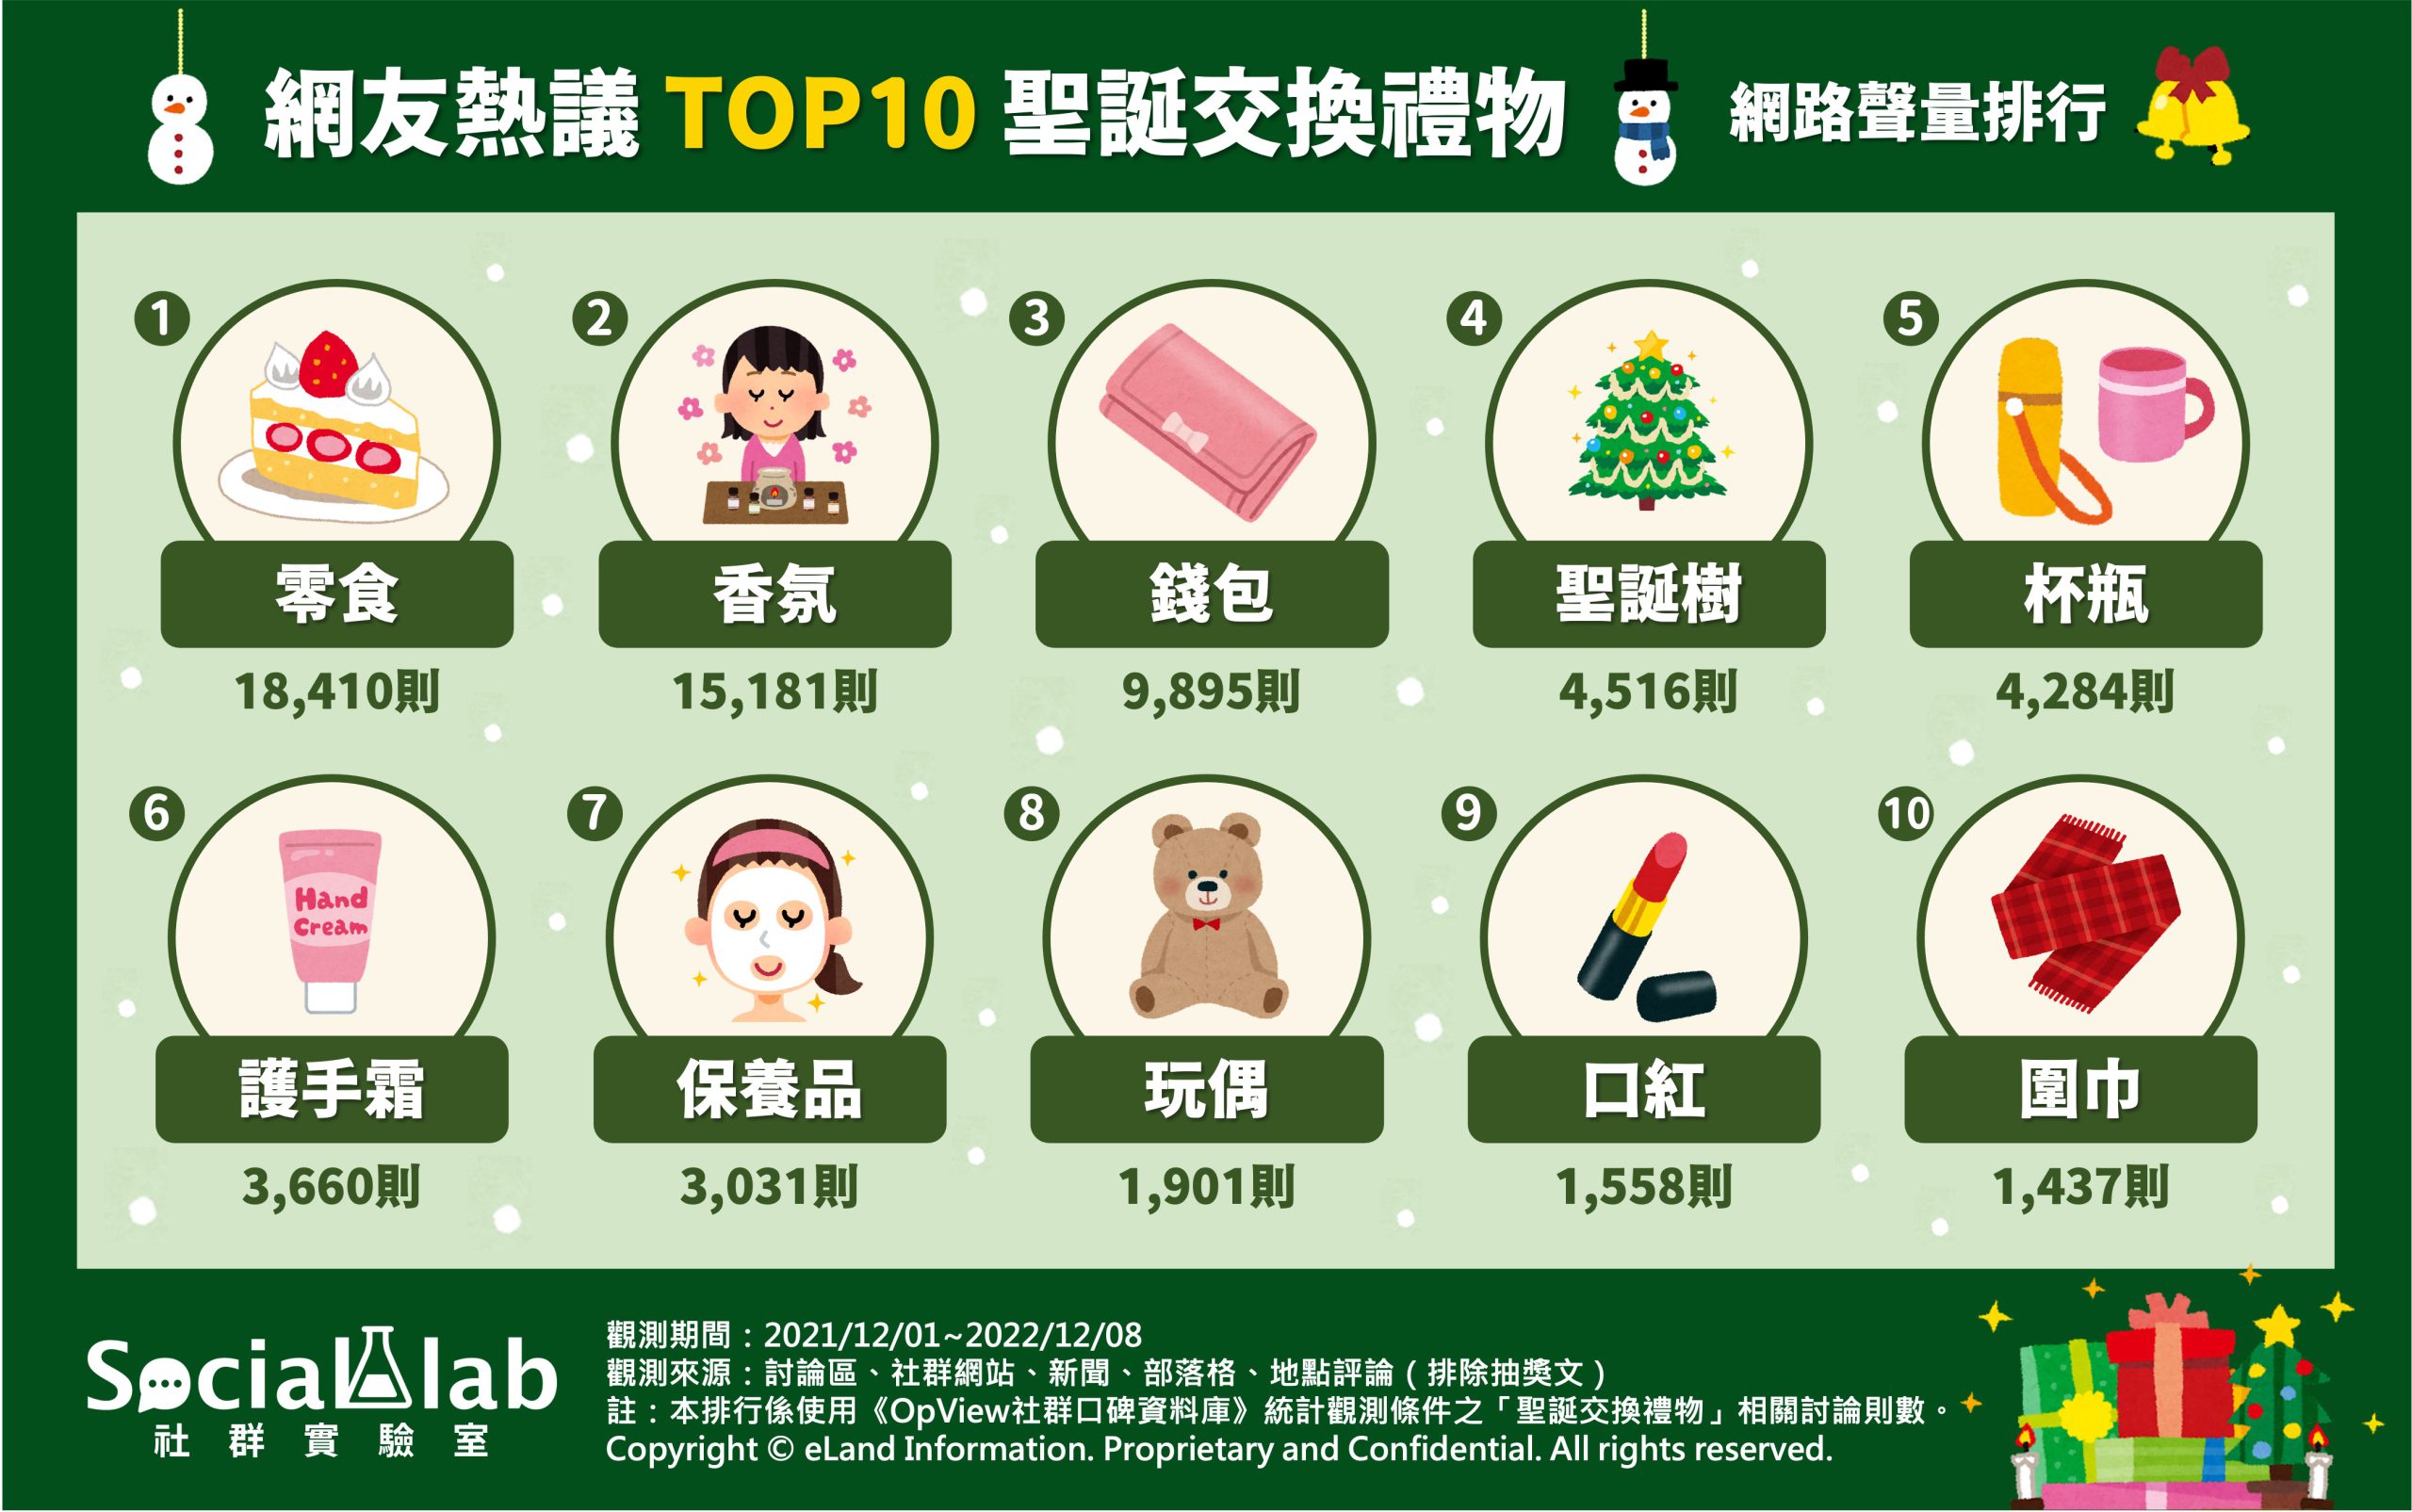 TOP10 聖誕交換禮物 網路聲量排行